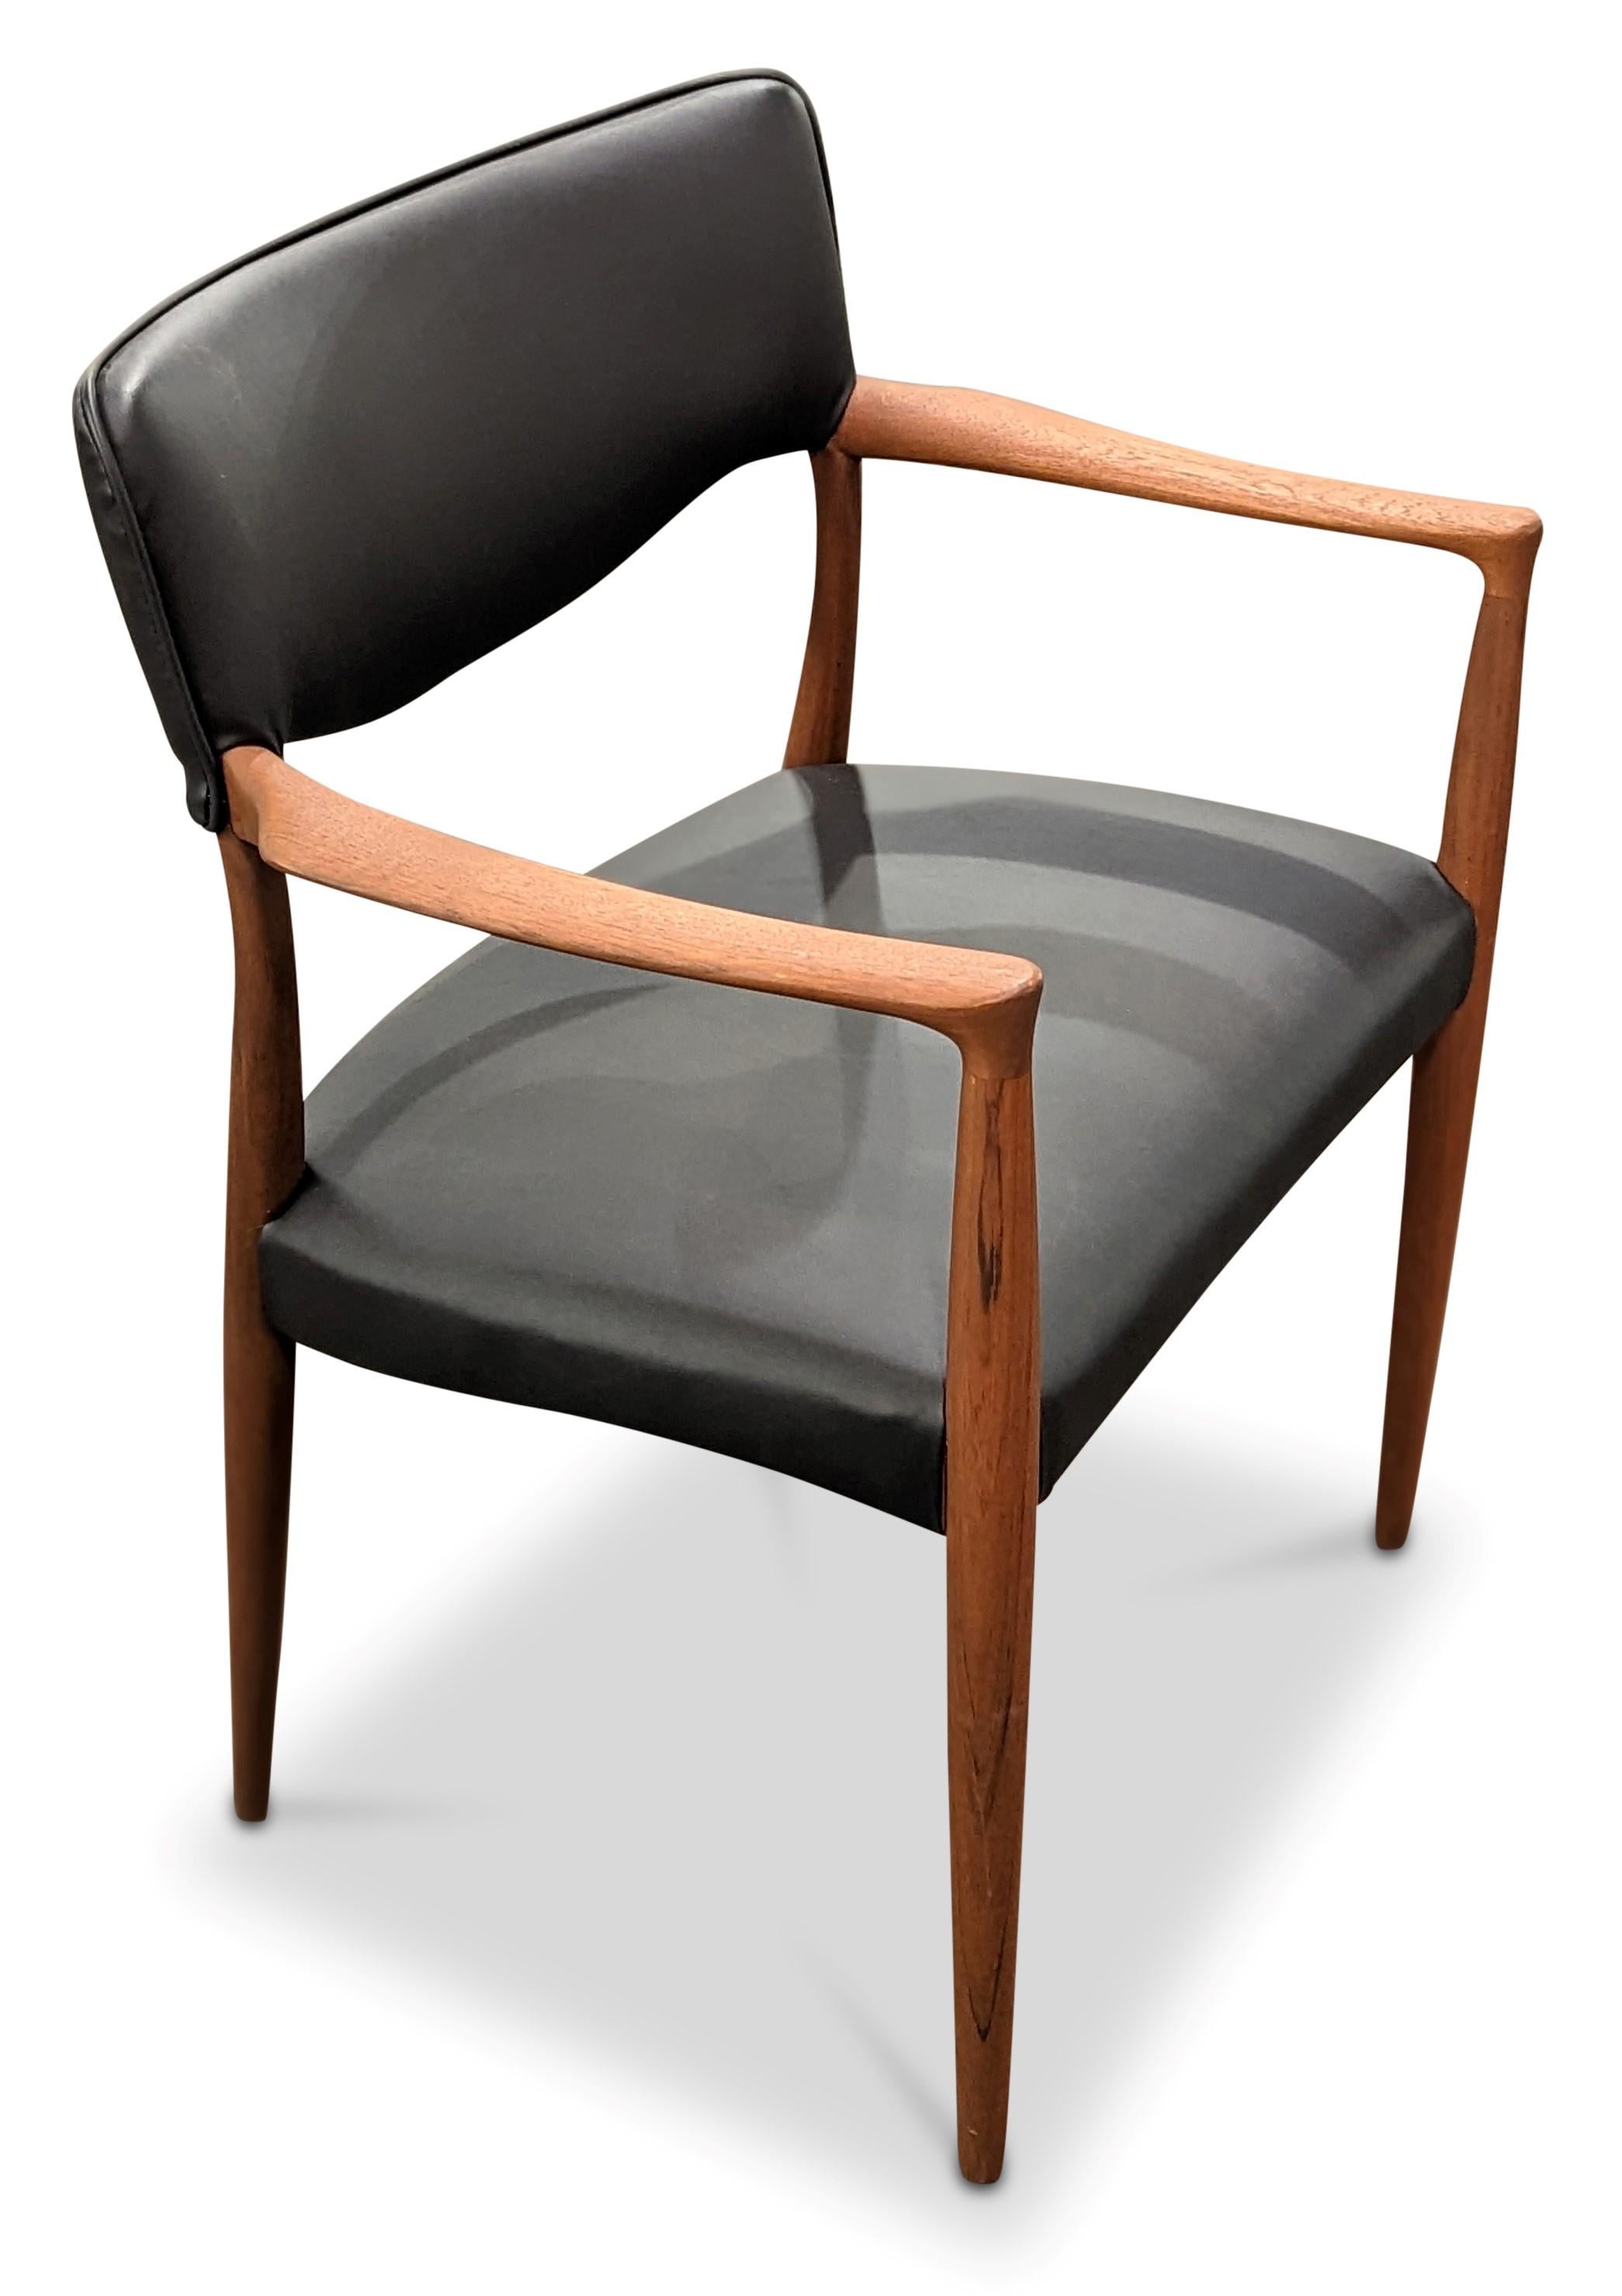 Mid-20th Century Vintage Danish Mid Century Teak Arm / Desk Chair - 122206